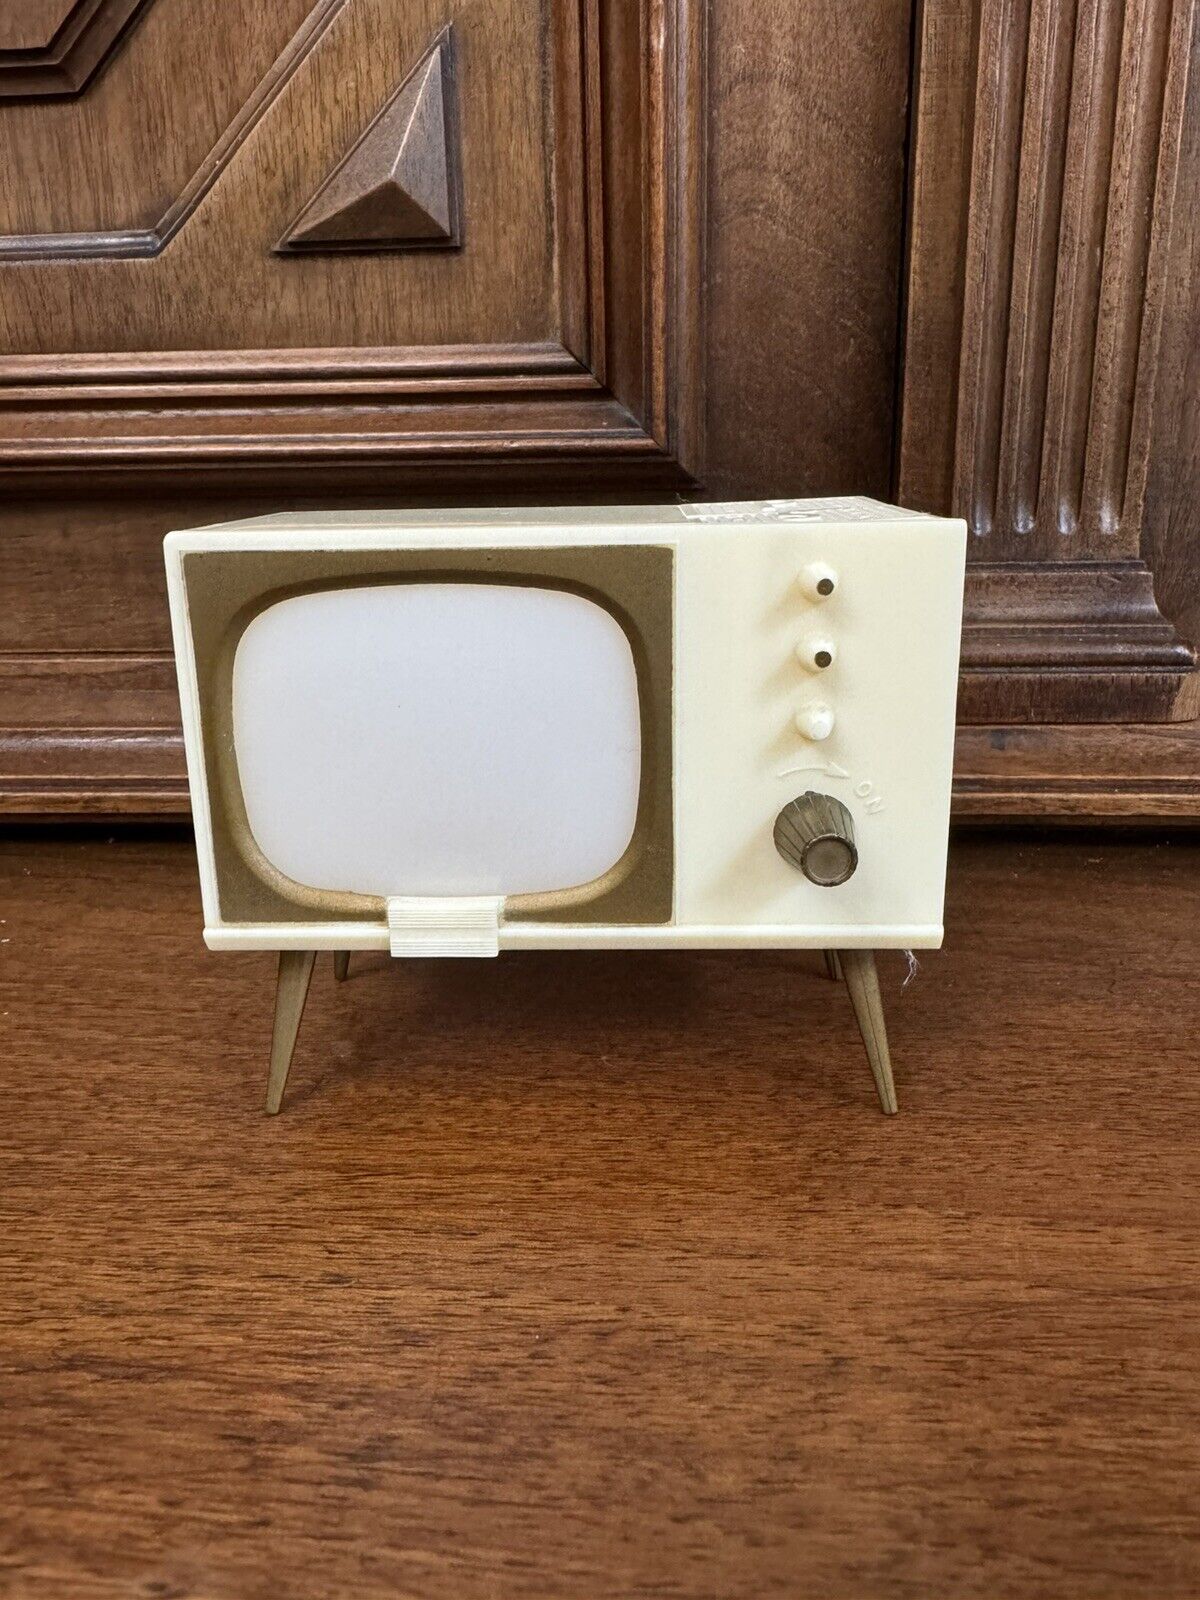 Tiny T-V Vintage Plastic 1950s Tv Set Salt and Pepper Shakers